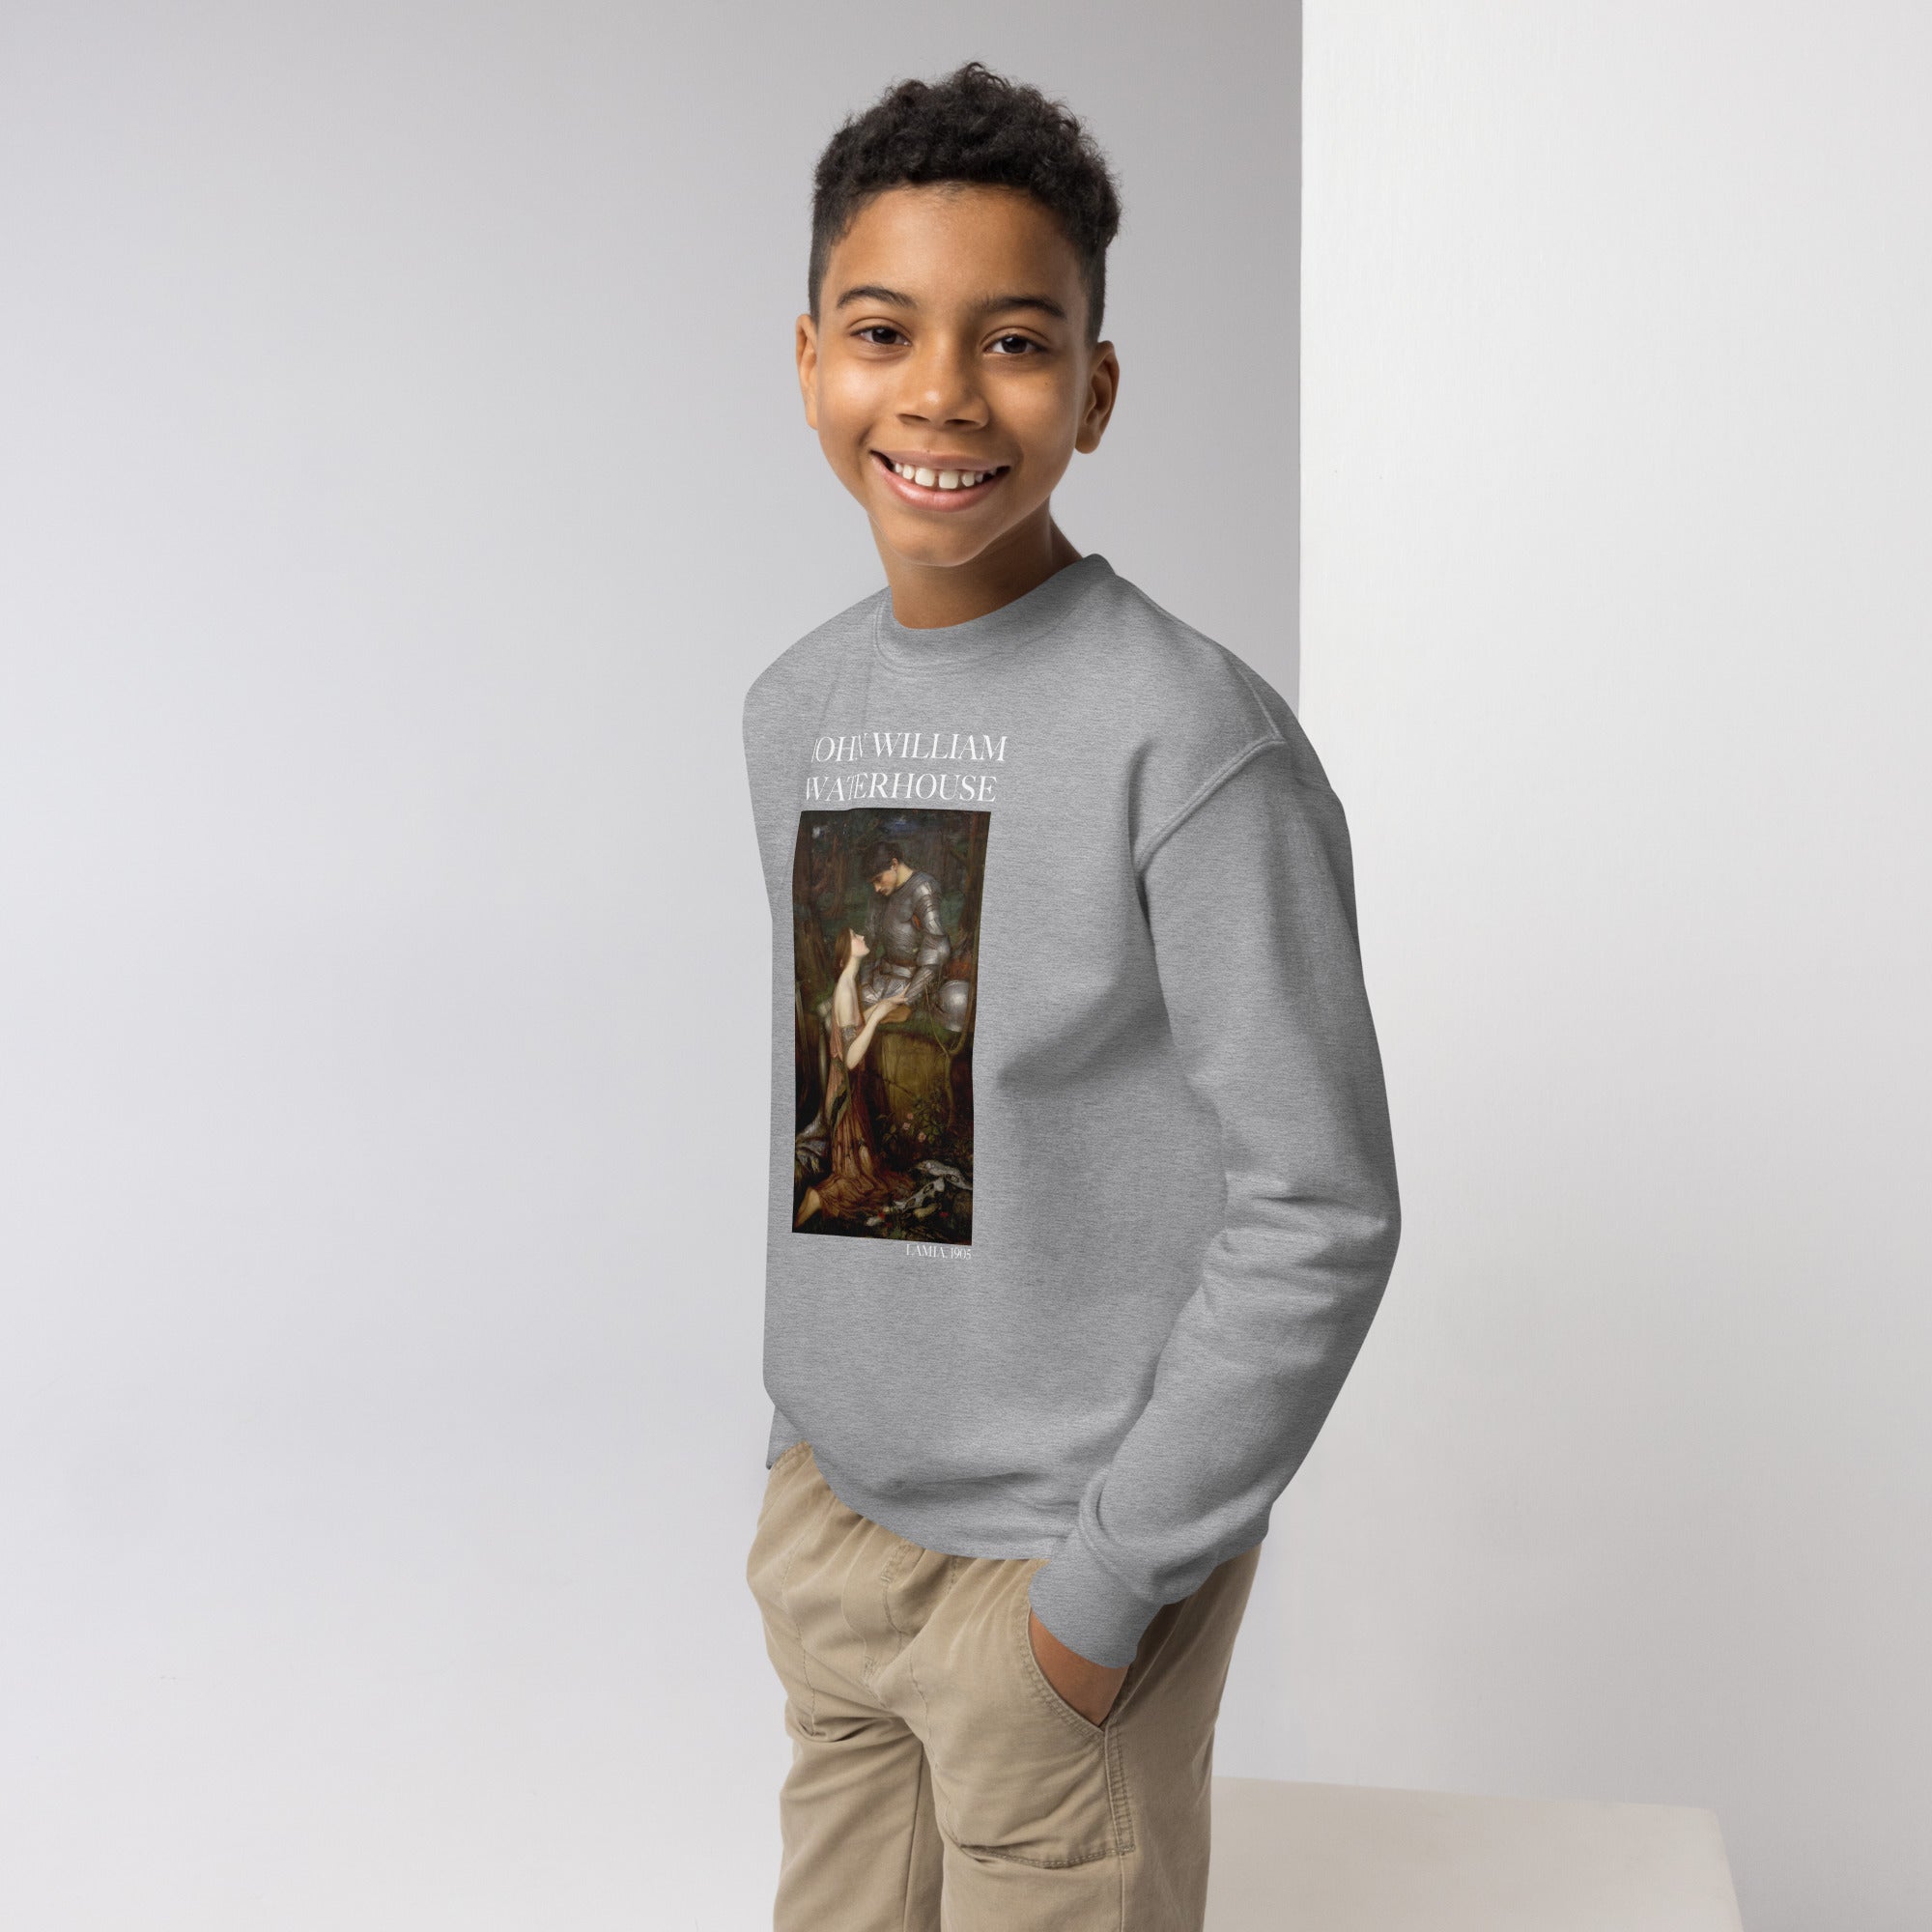 John William Waterhouse 'Lamia' Famous Painting Crewneck Sweatshirt | Premium Youth Art Sweatshirt